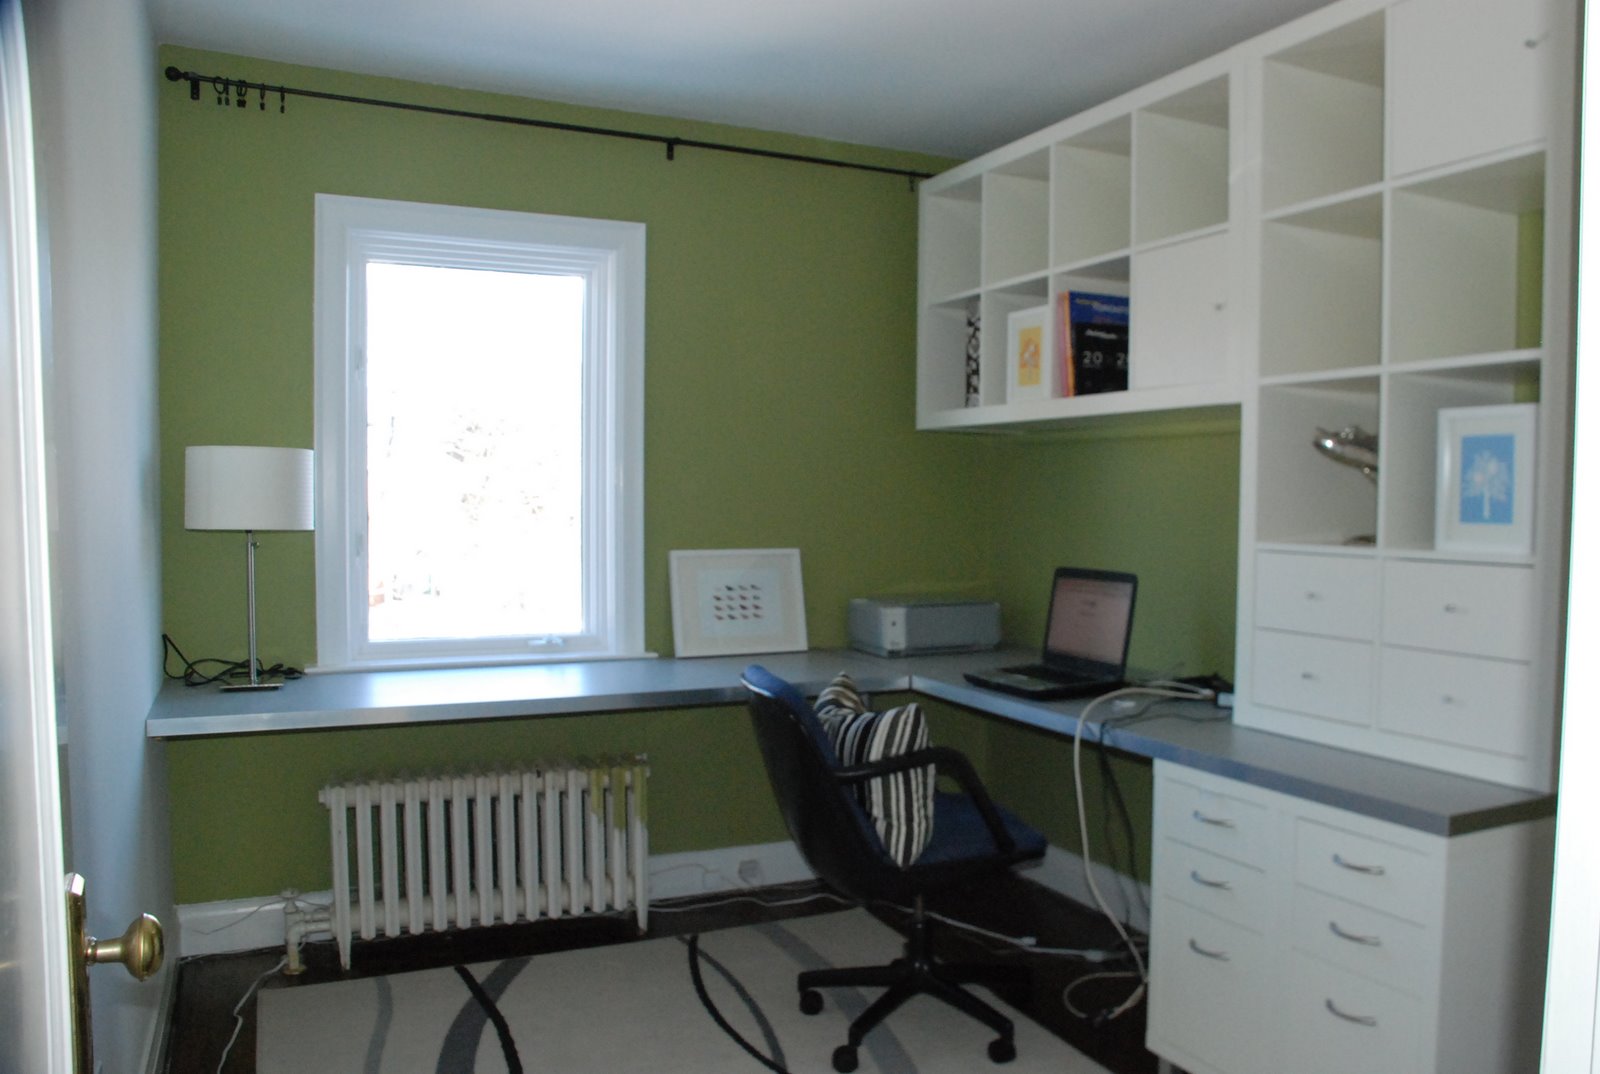 IKEA l shaped desk, ikea home office, l shape desk ikea, ikea office hack, ikea expedit on walls